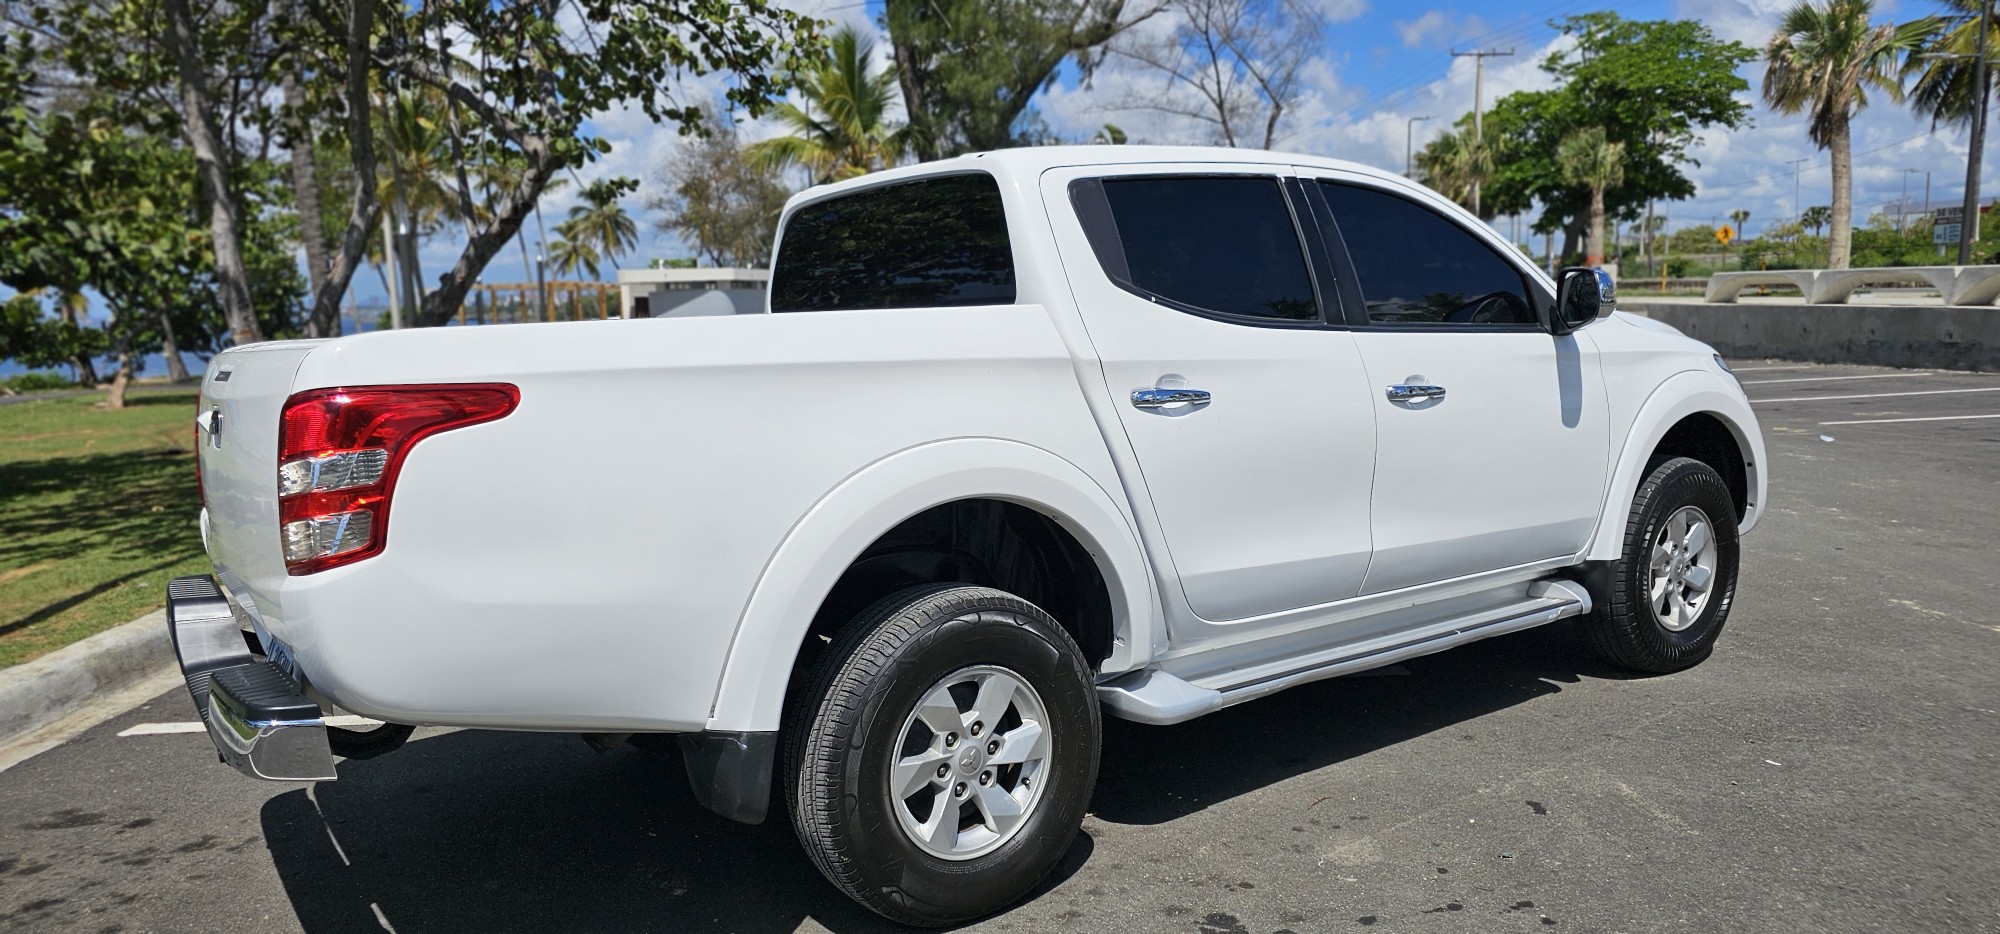 jeepetas y camionetas - Mitsubishi L200 2019 full 4x4  8